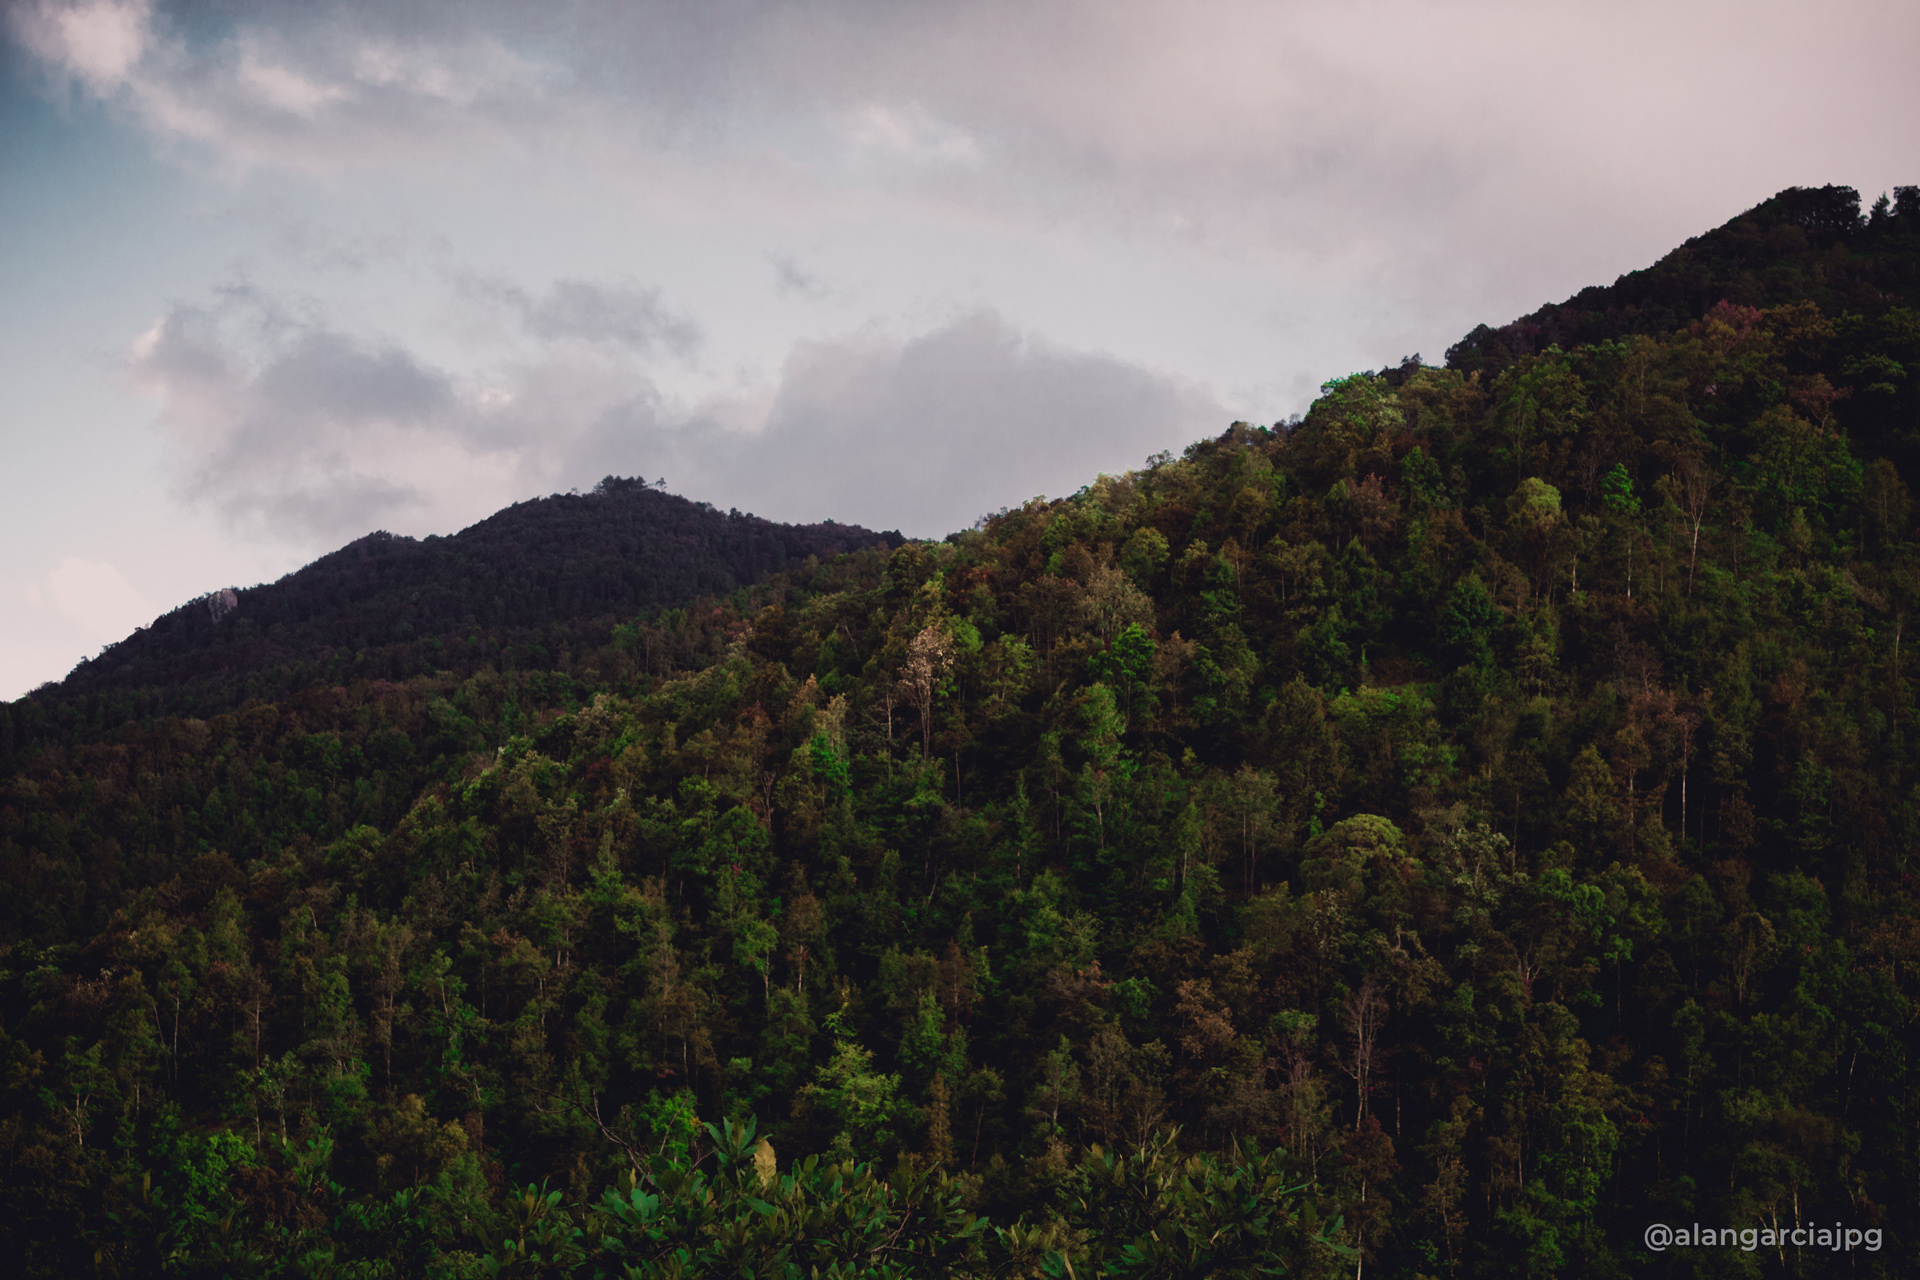 Montañas tupidas de árboles en San Andrés Tianguistengo, Actopan, Hidalgo.